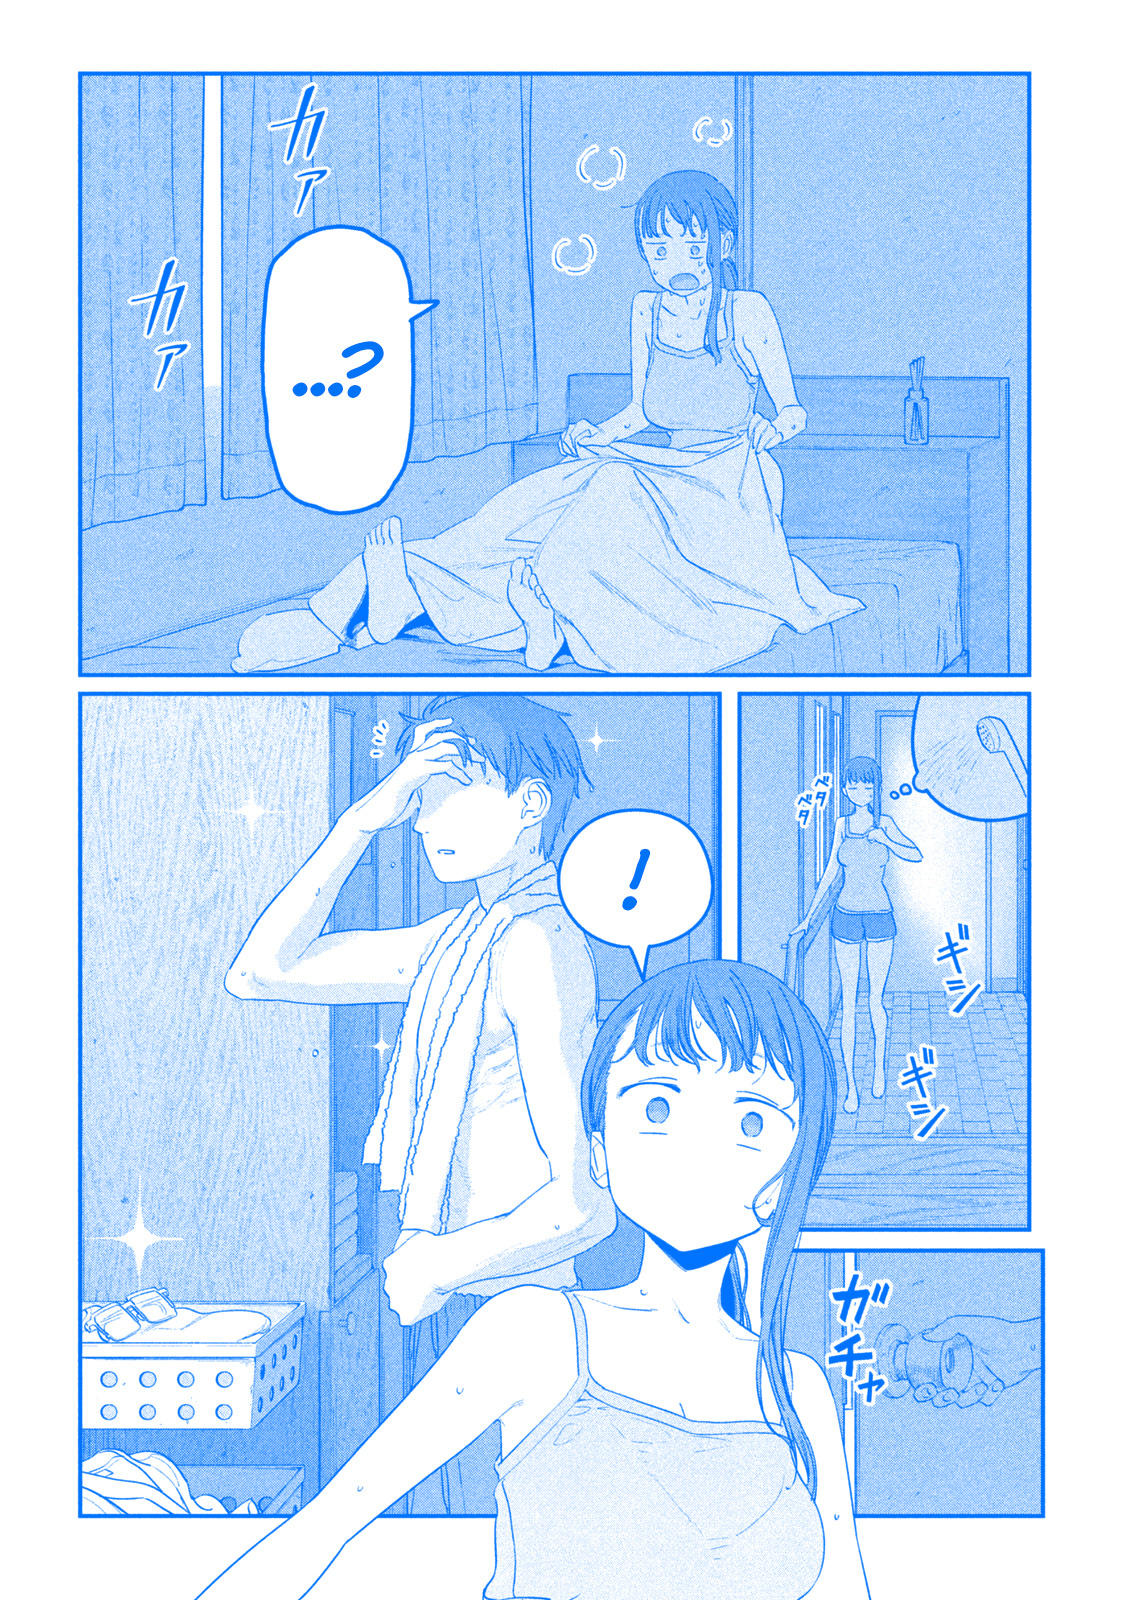 Read Getsuyoubi No Tawawa Chapter 68: Cheer-Chan, Part 1 (Blue) - Manganelo